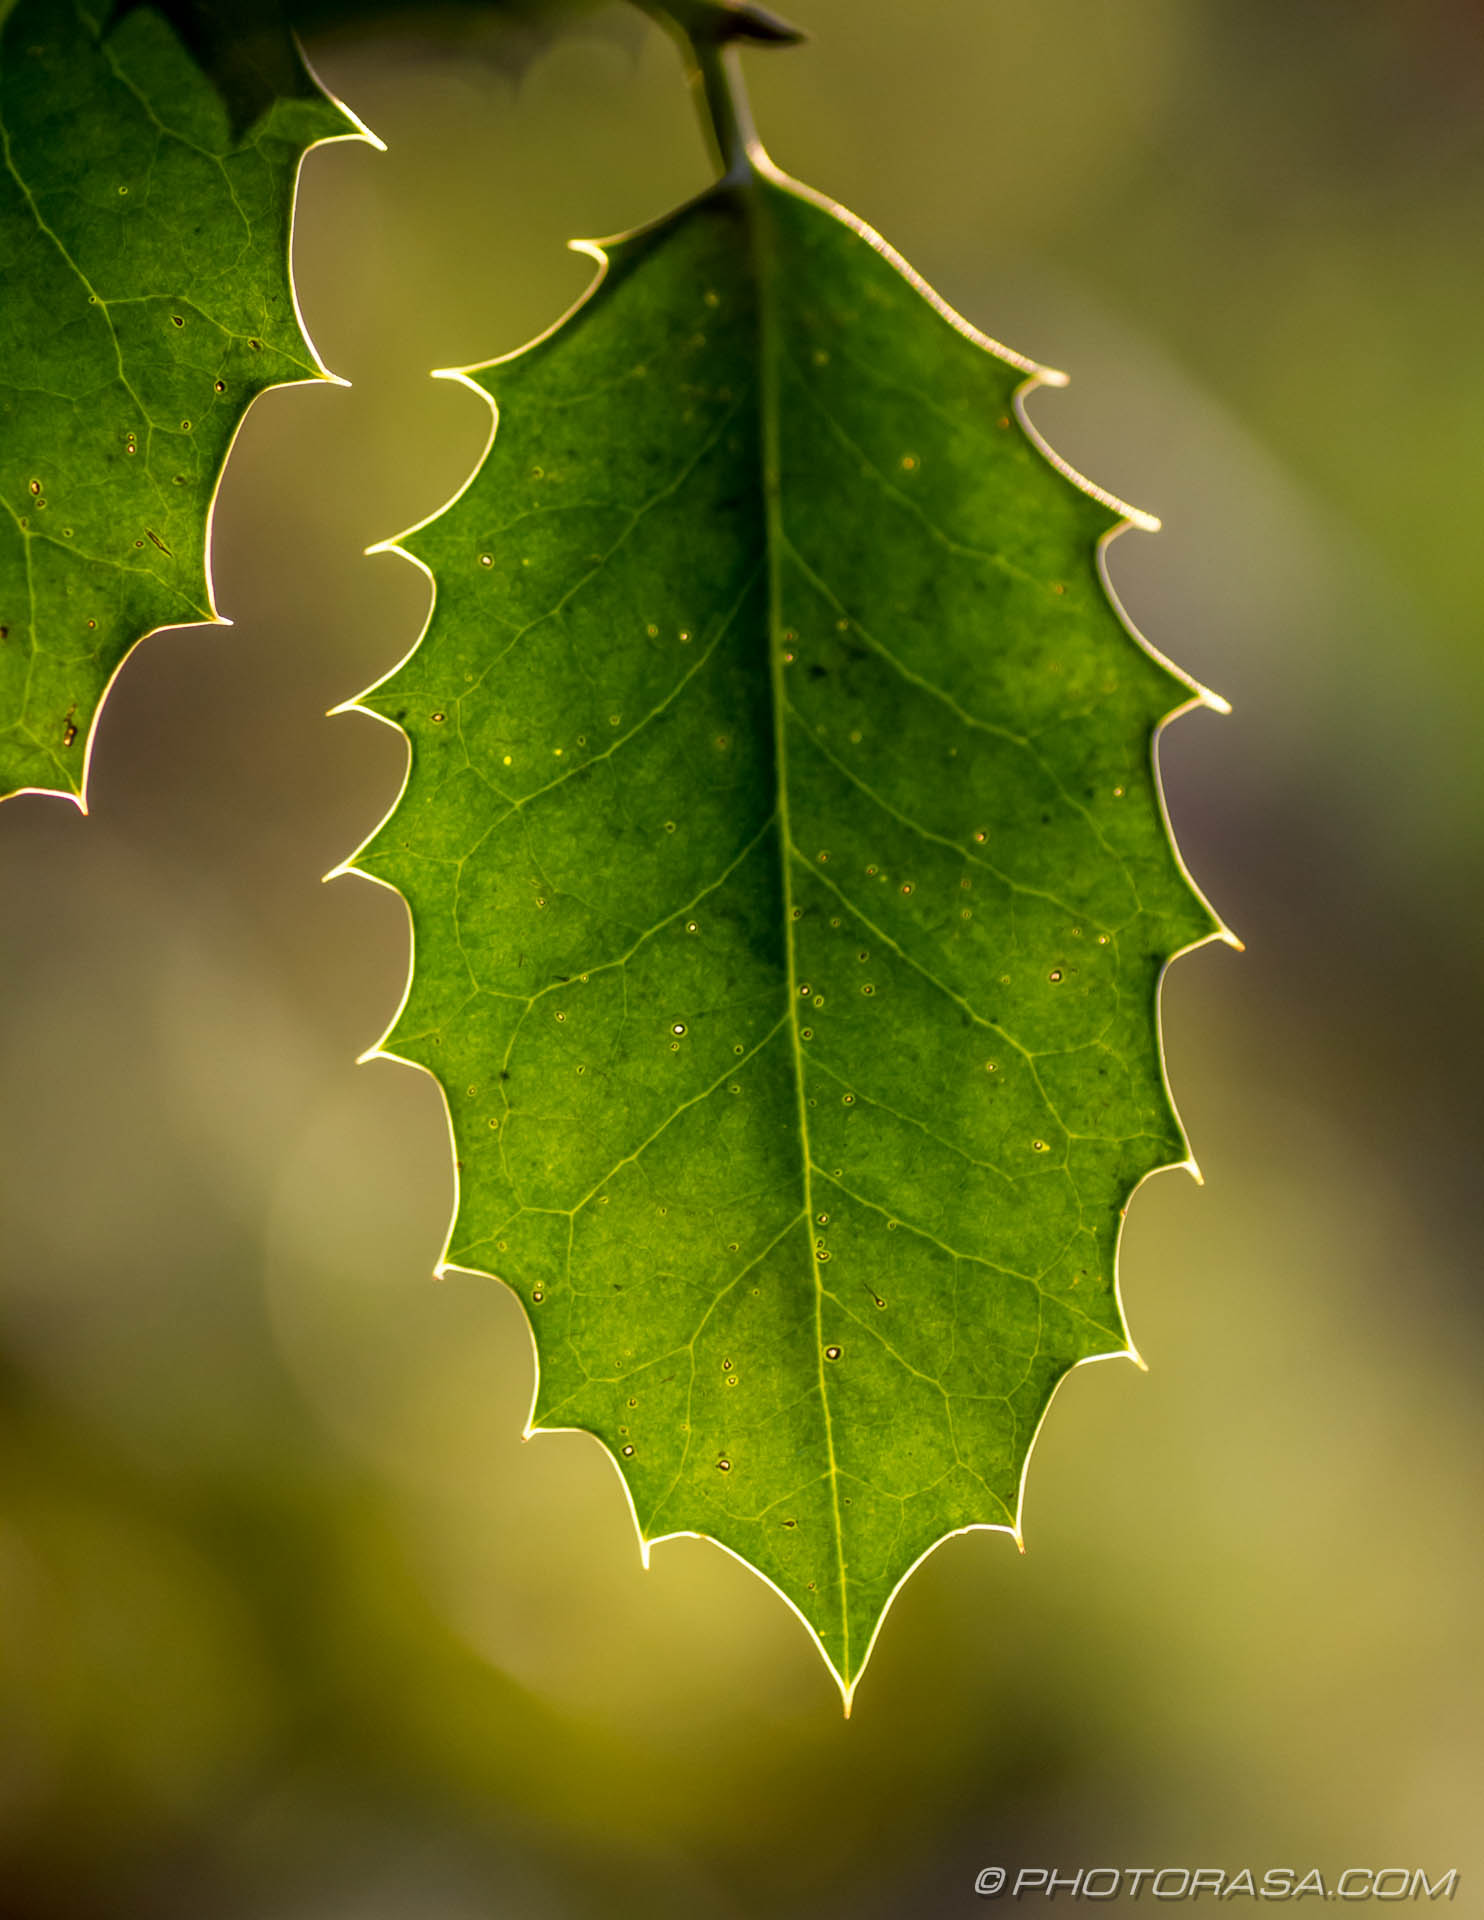 transparent holly leaf and veins - Photorasa Free HD Photos